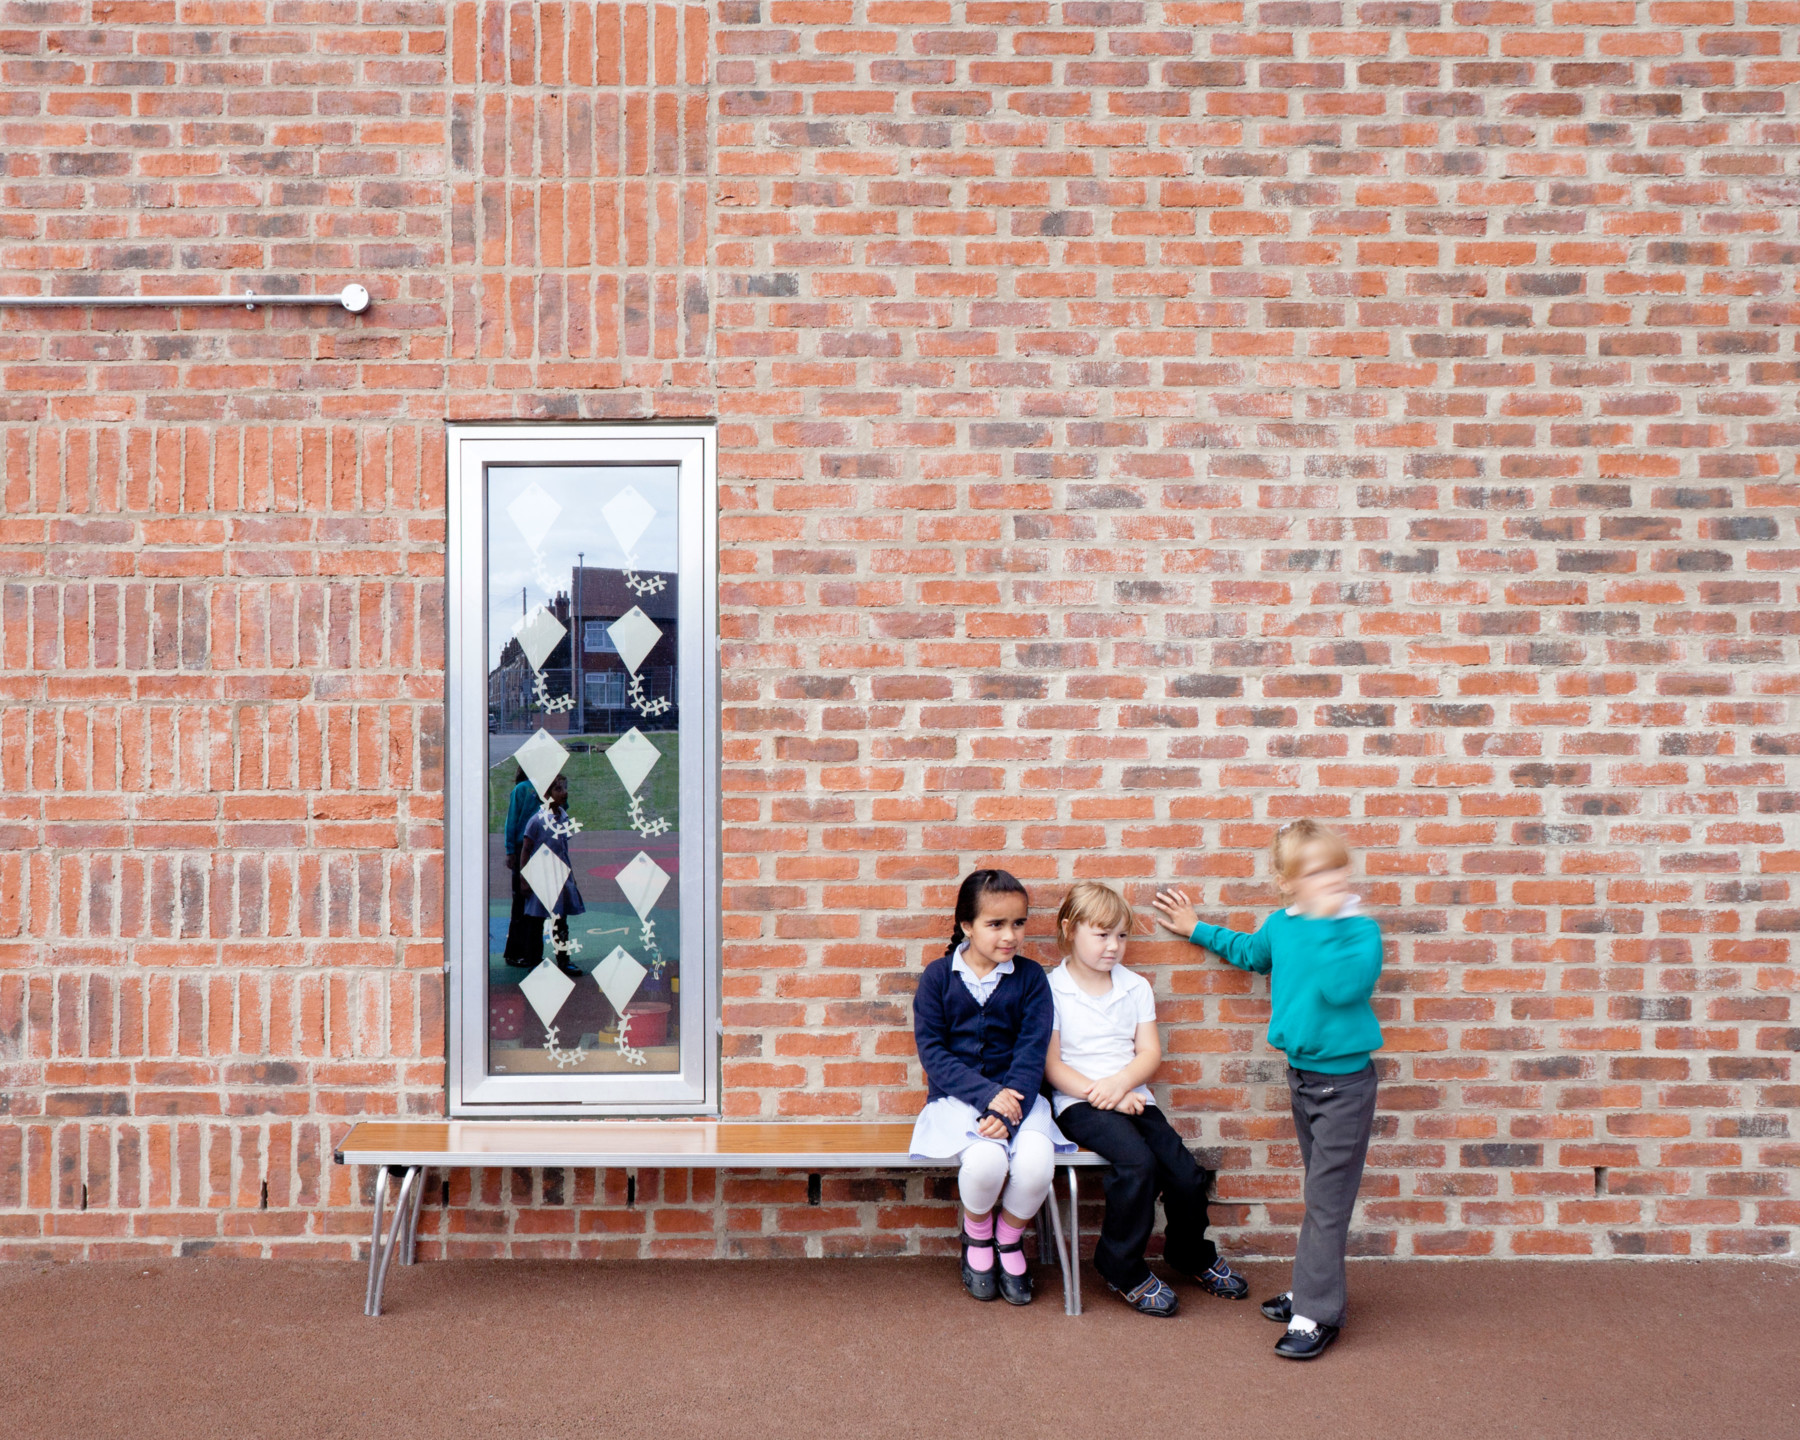 Sarah-Wigglesworth-Architects Sandal-Magna Child-brick 3600